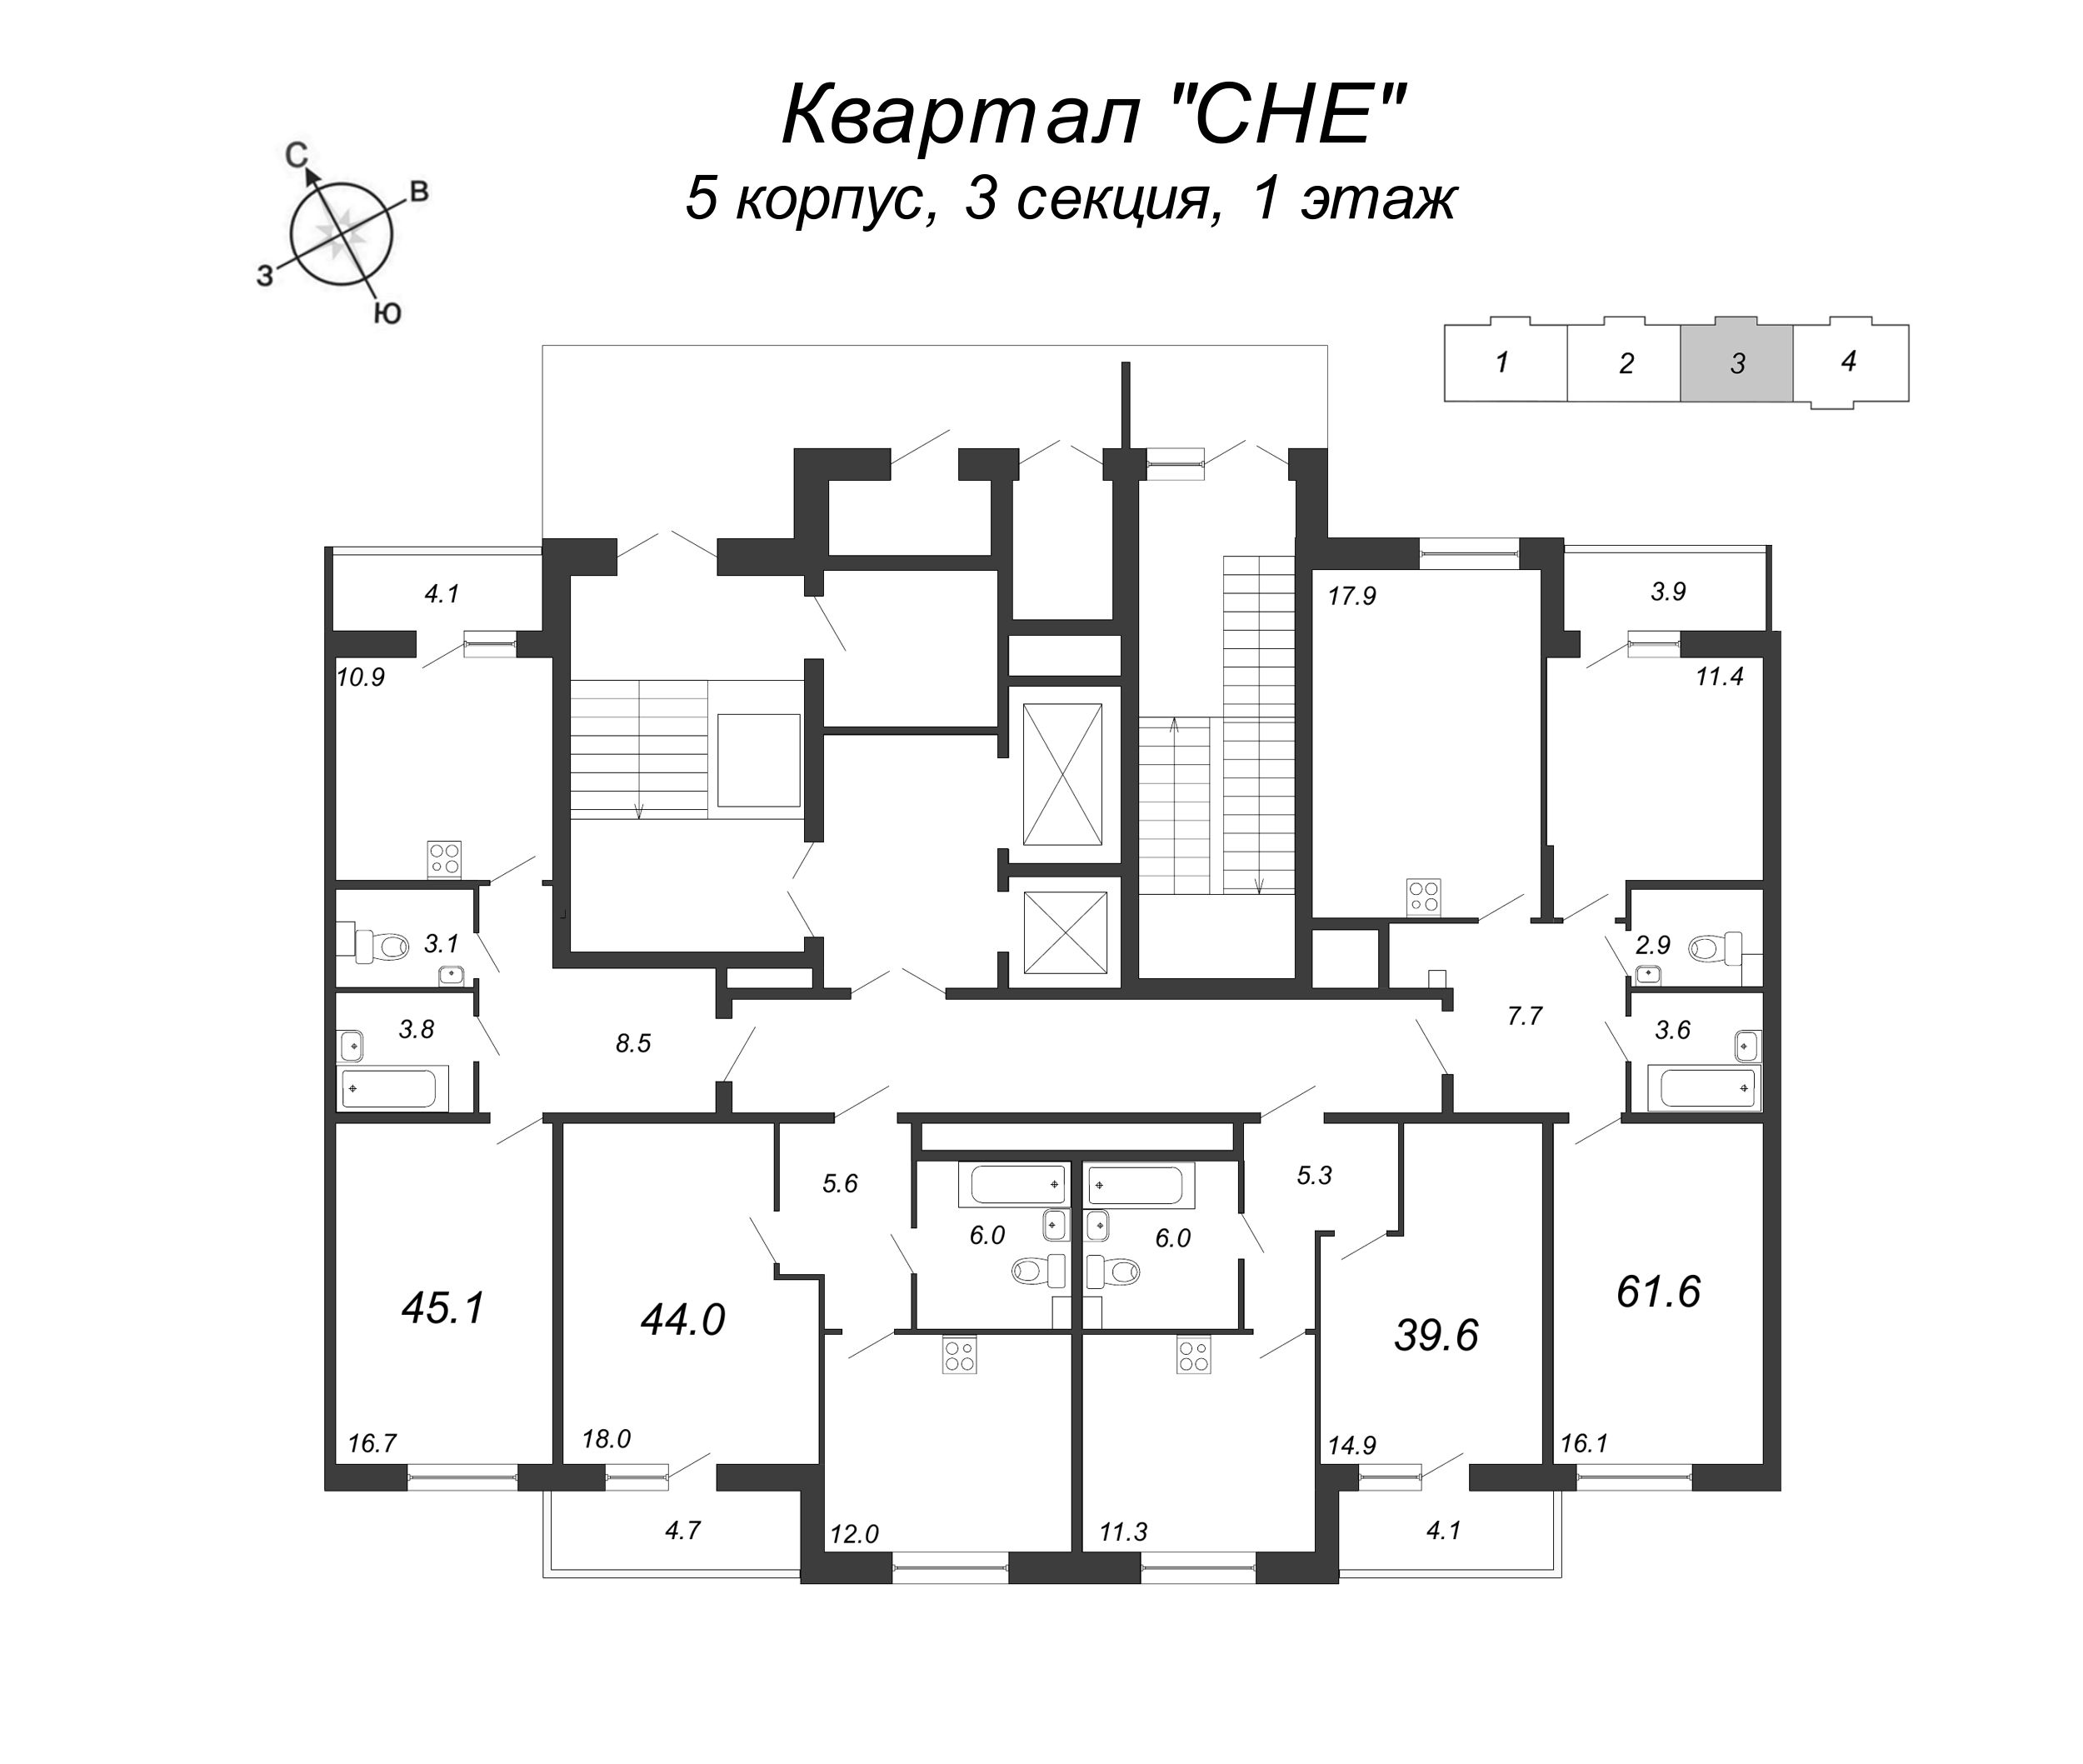 1-комнатная квартира, 45.6 м² в ЖК "Квартал Che" - планировка этажа